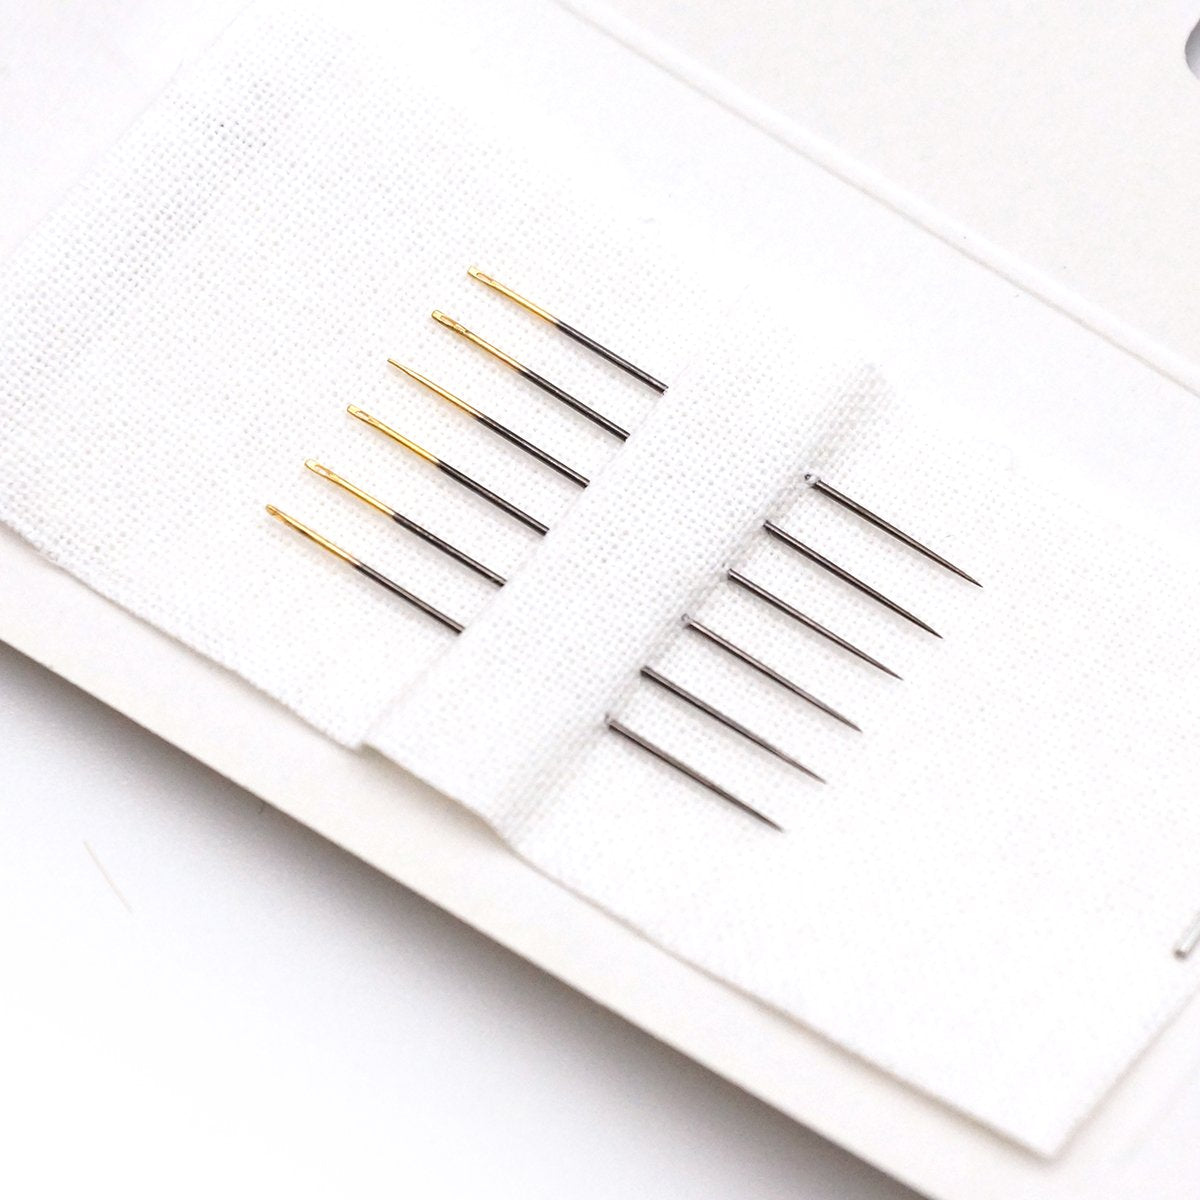 Black Gold Hand Sewing Needles (Applique/Sharps) No. 12